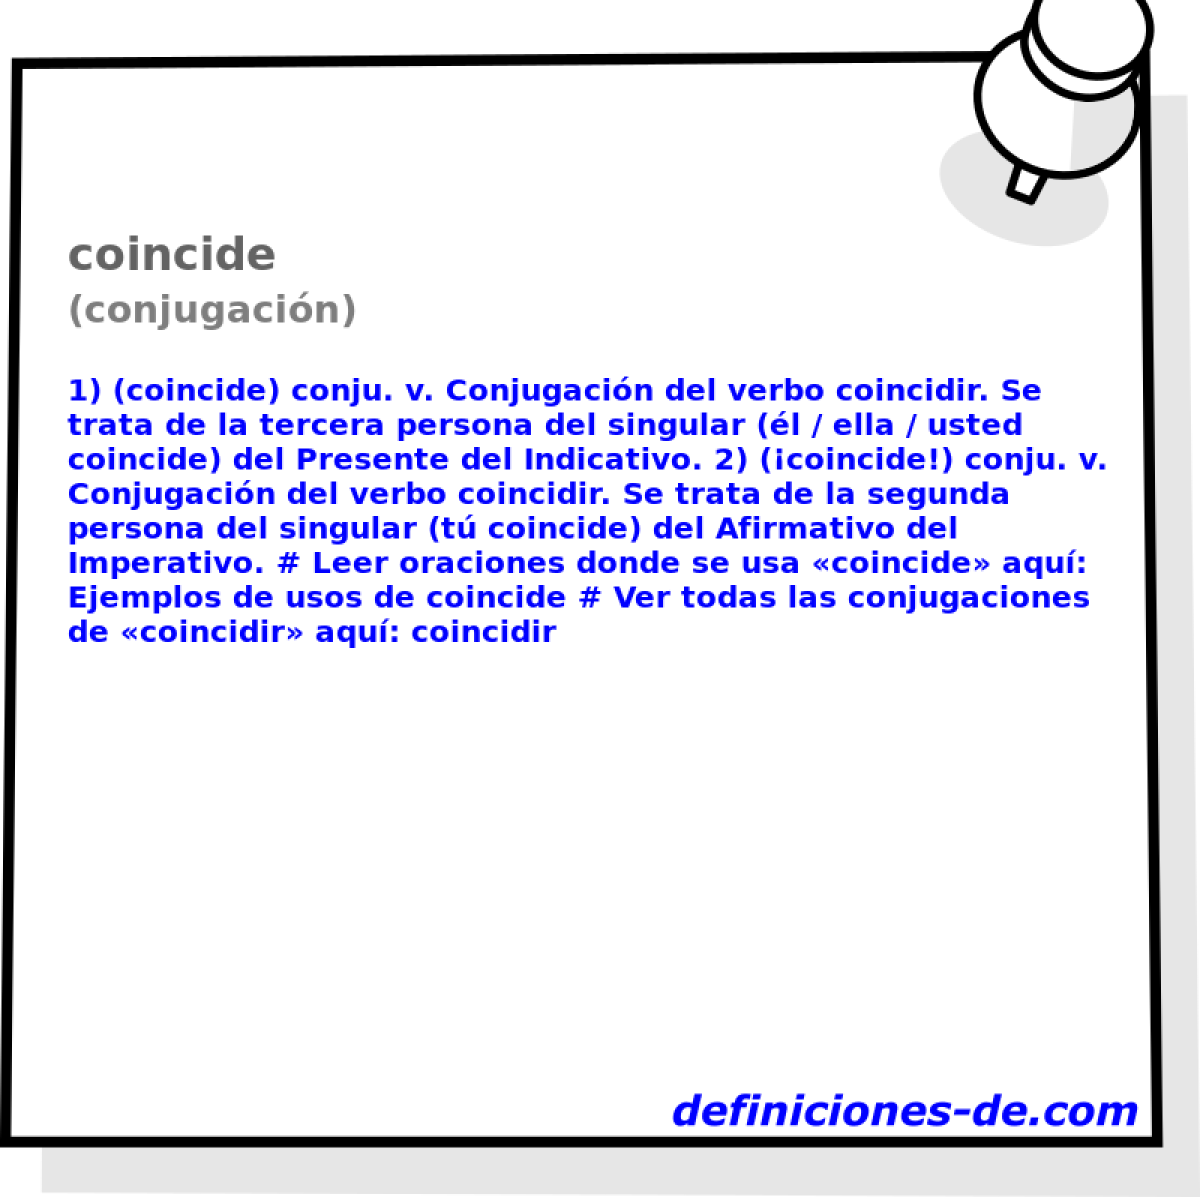 coincide (conjugacin)